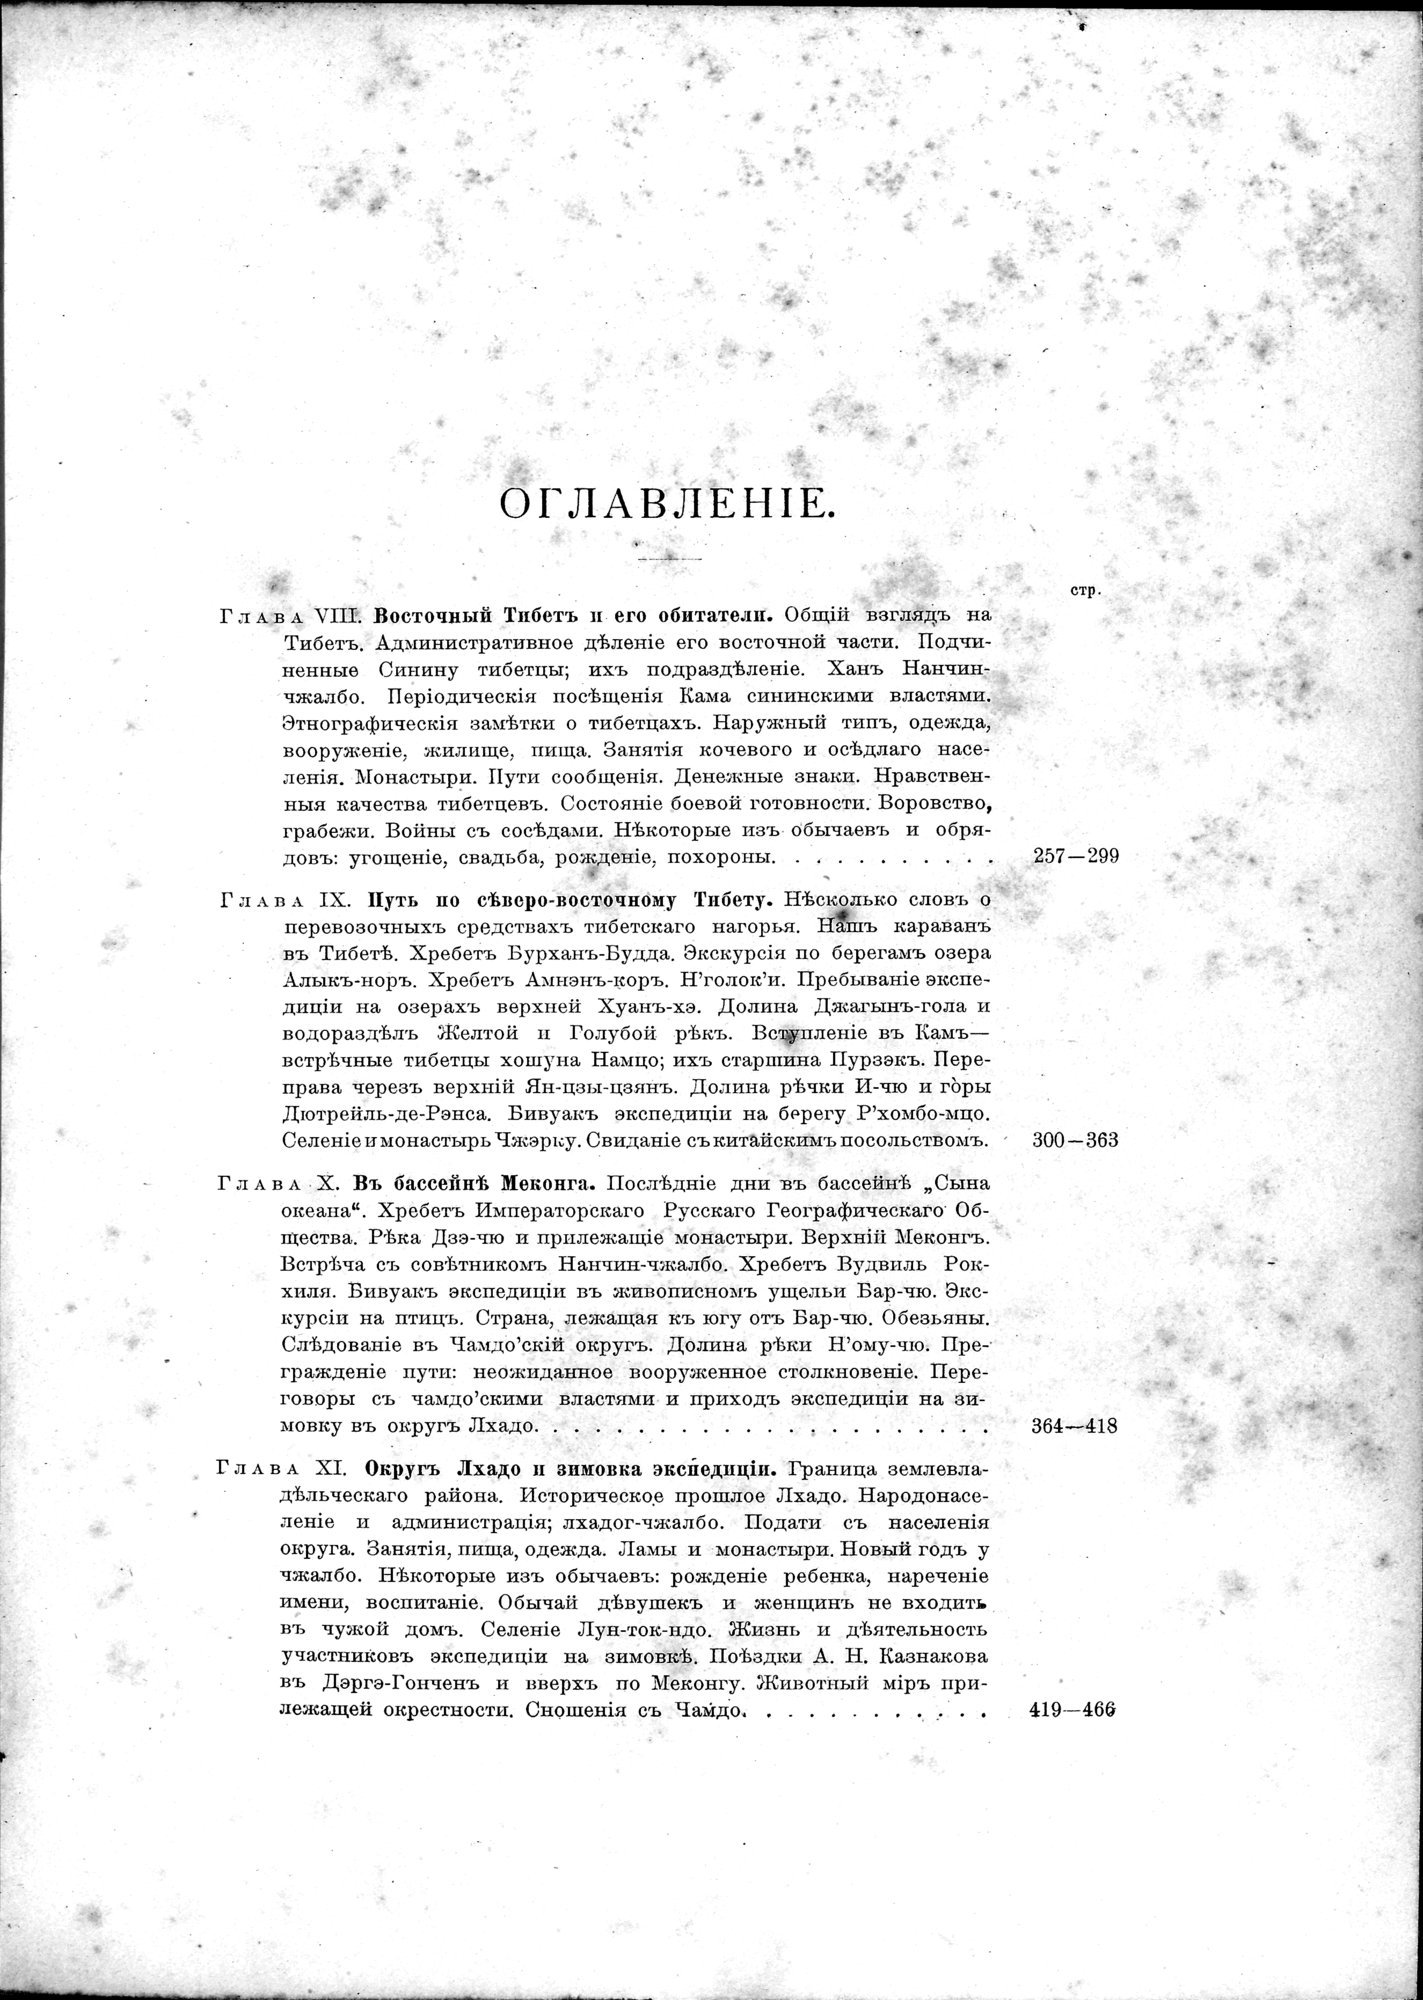 Mongoliia i Kam : vol.2 / Page 13 (Grayscale High Resolution Image)